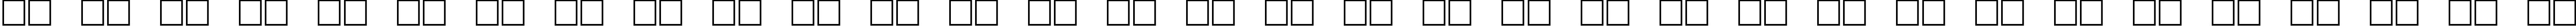 Пример написания русского алфавита шрифтом Chinese Generic1